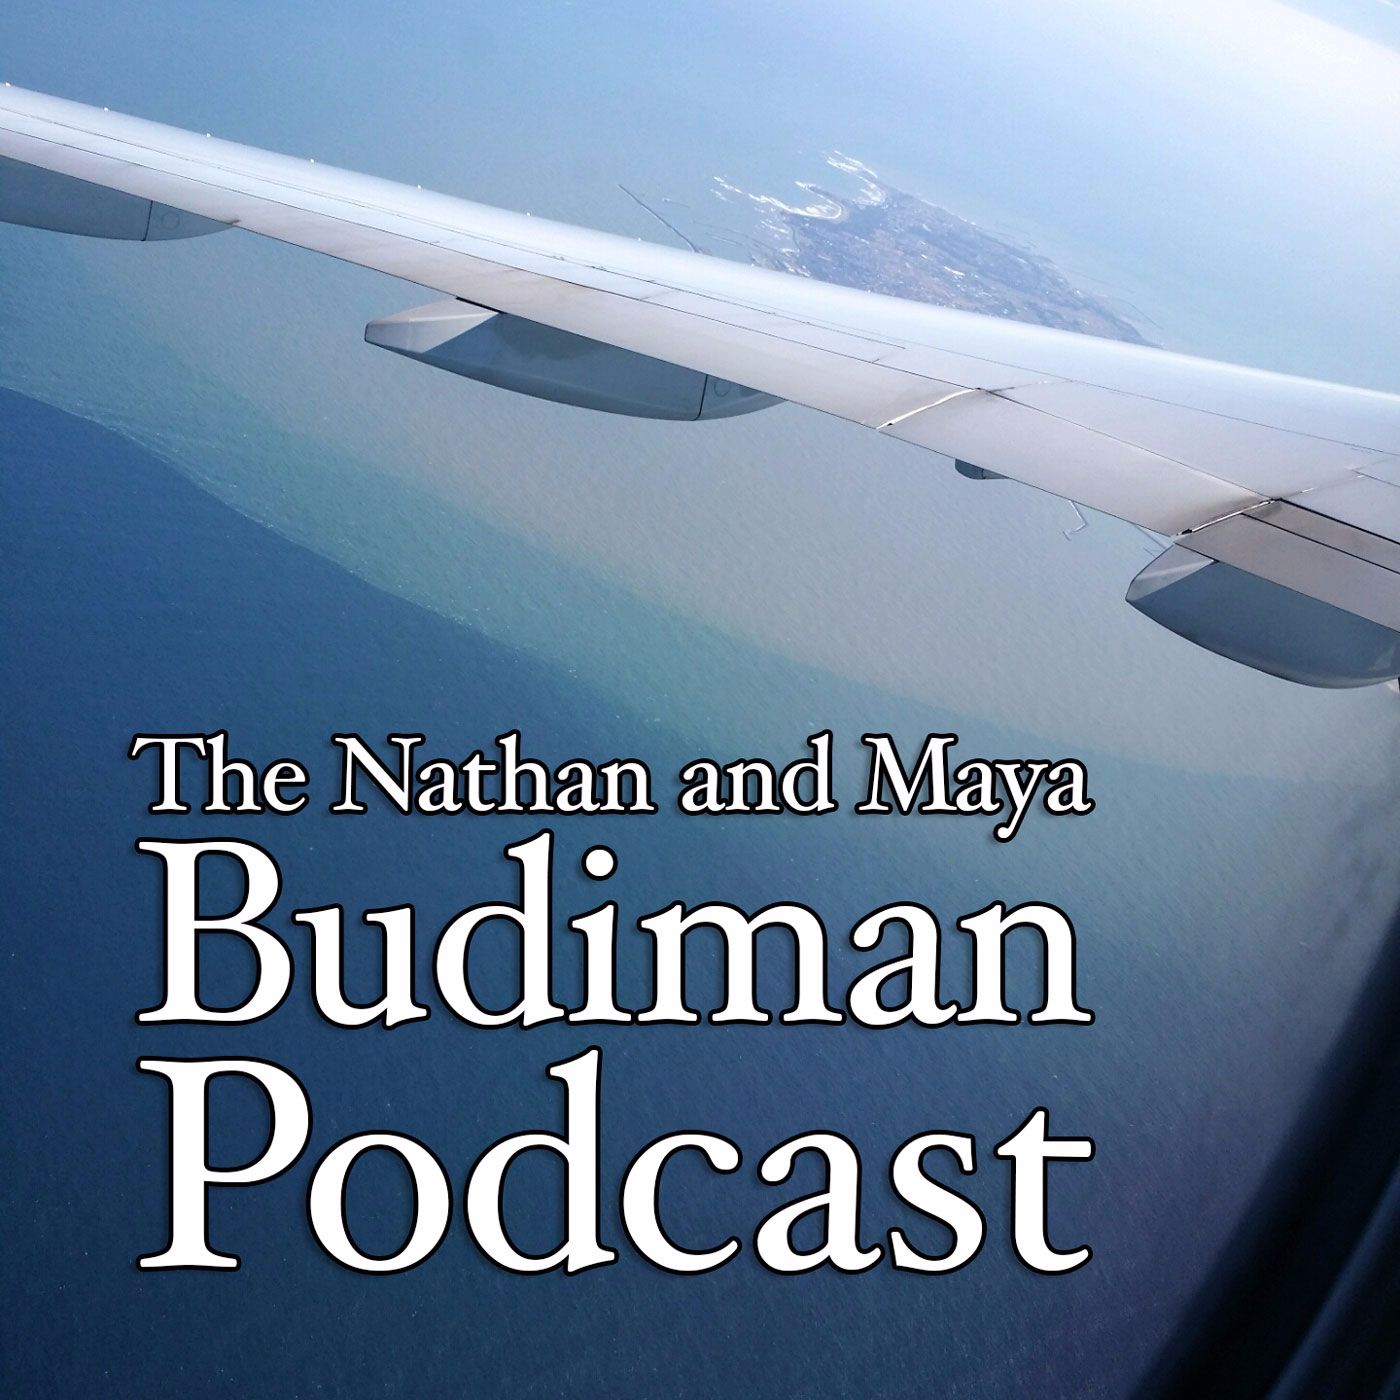 Podcast by Nathan & Maya Budiman